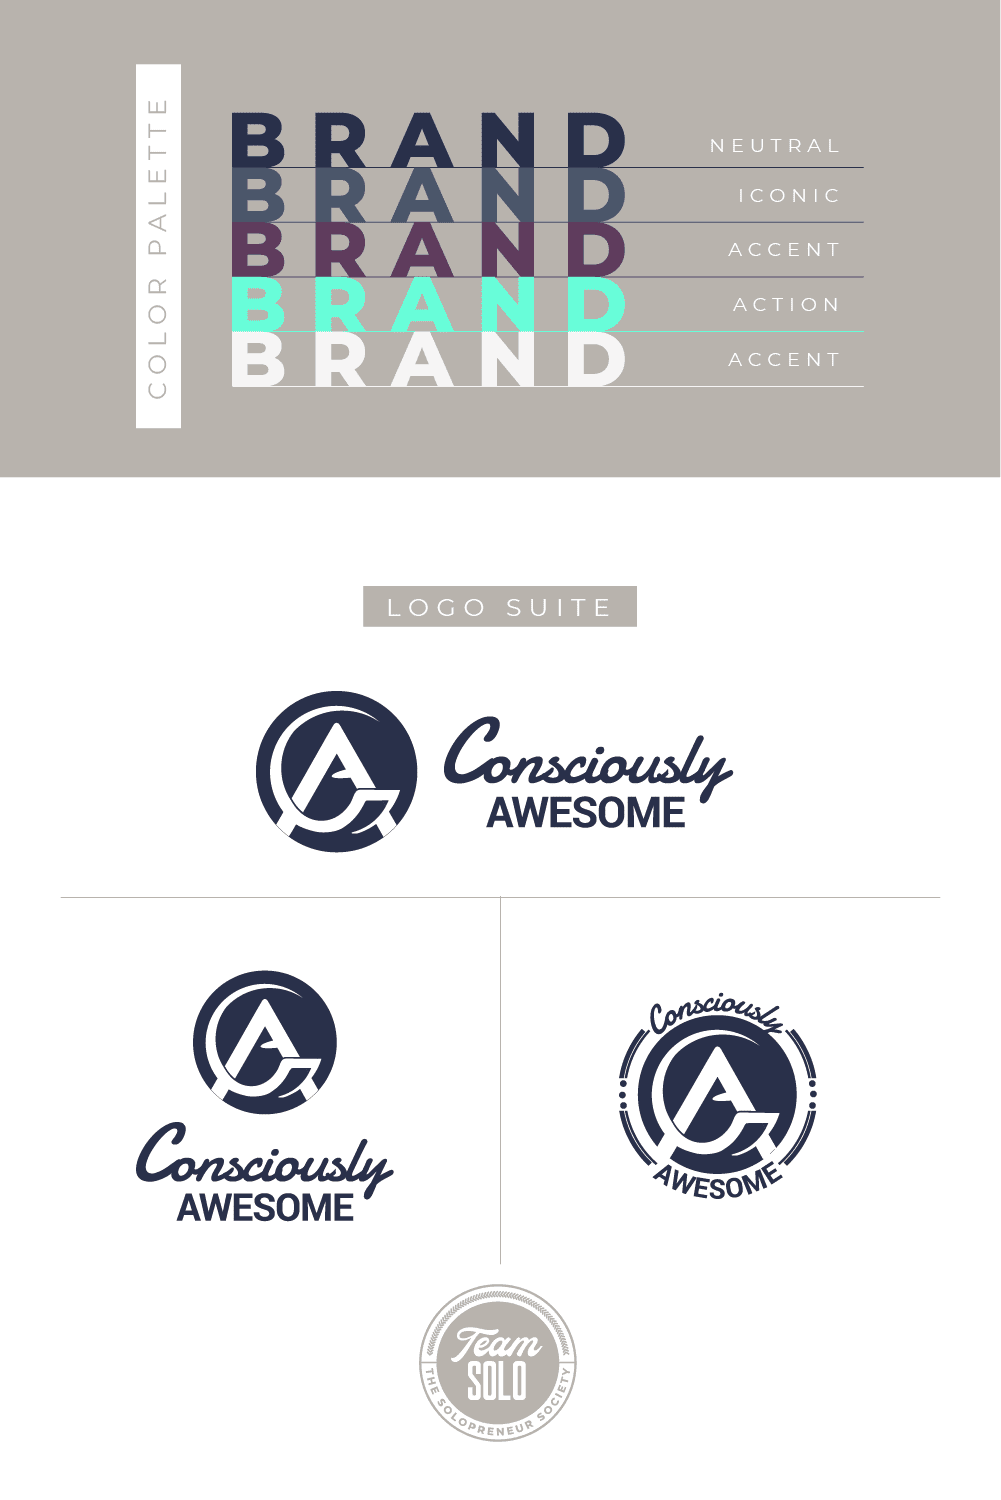 Consciously Awesome Logo Suite Design